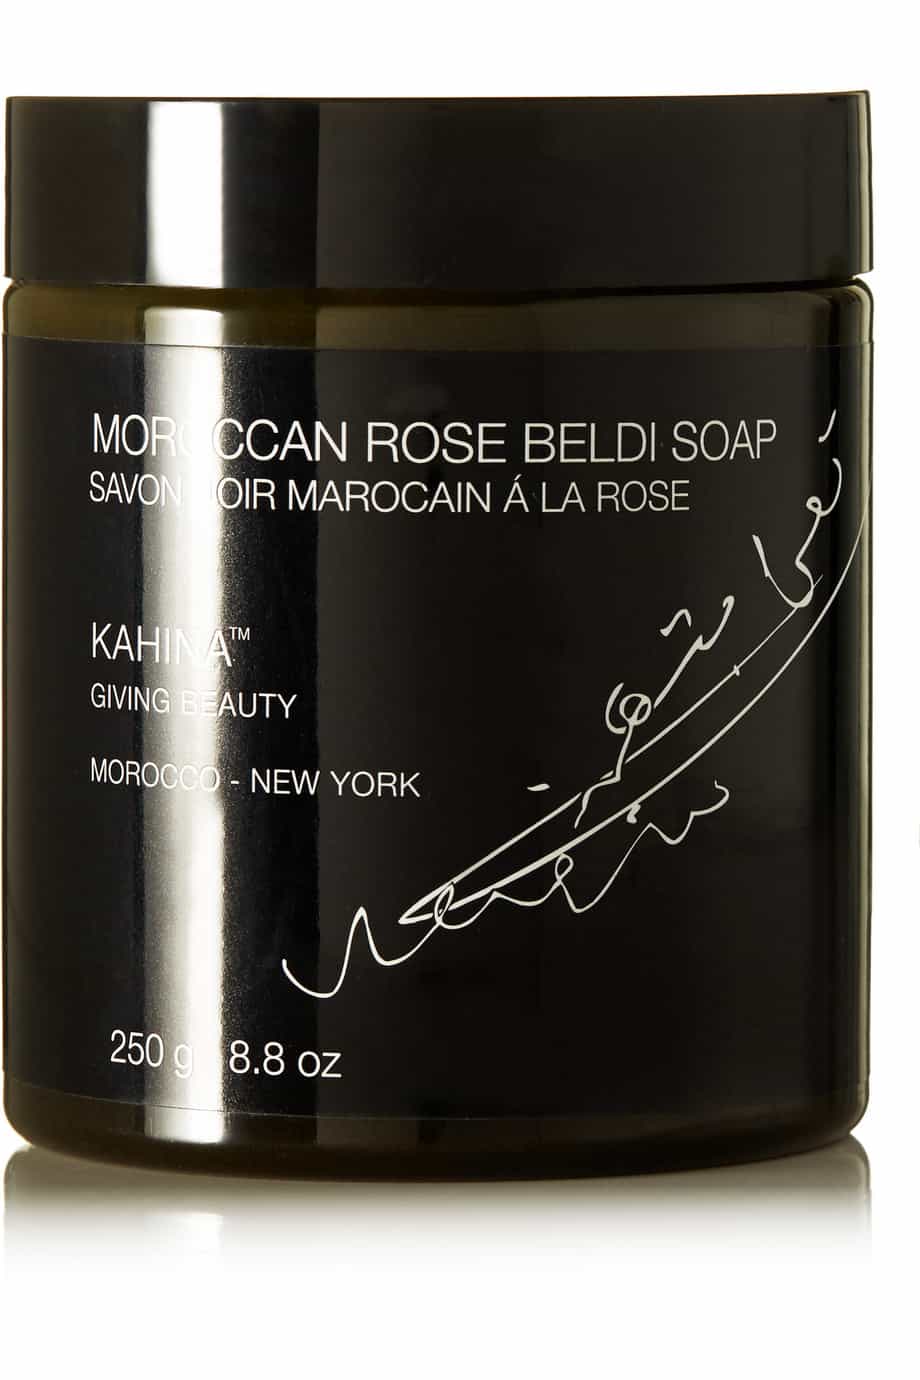 Kahina giving beauty moroccan rose beldi soap